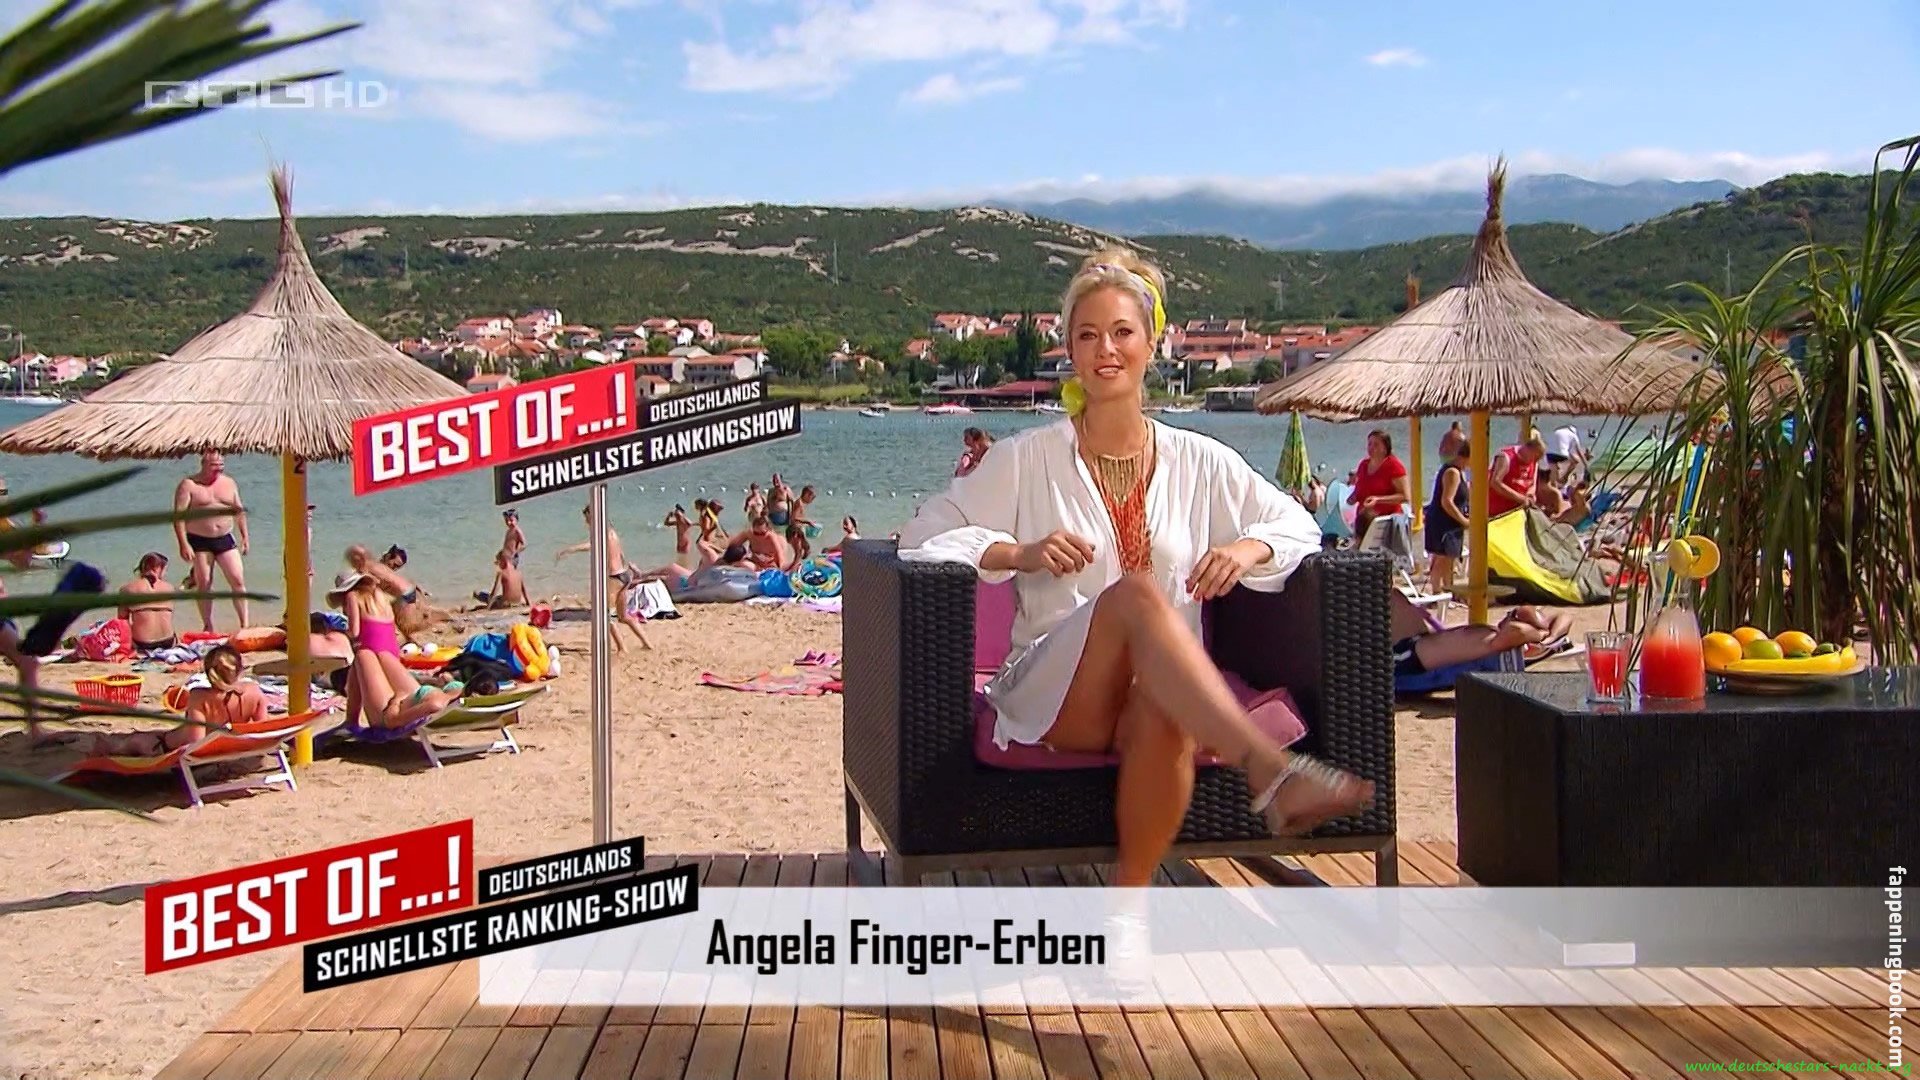 Angela Finger-Erben Nude, The Fappening - Photo #557440 - Fa